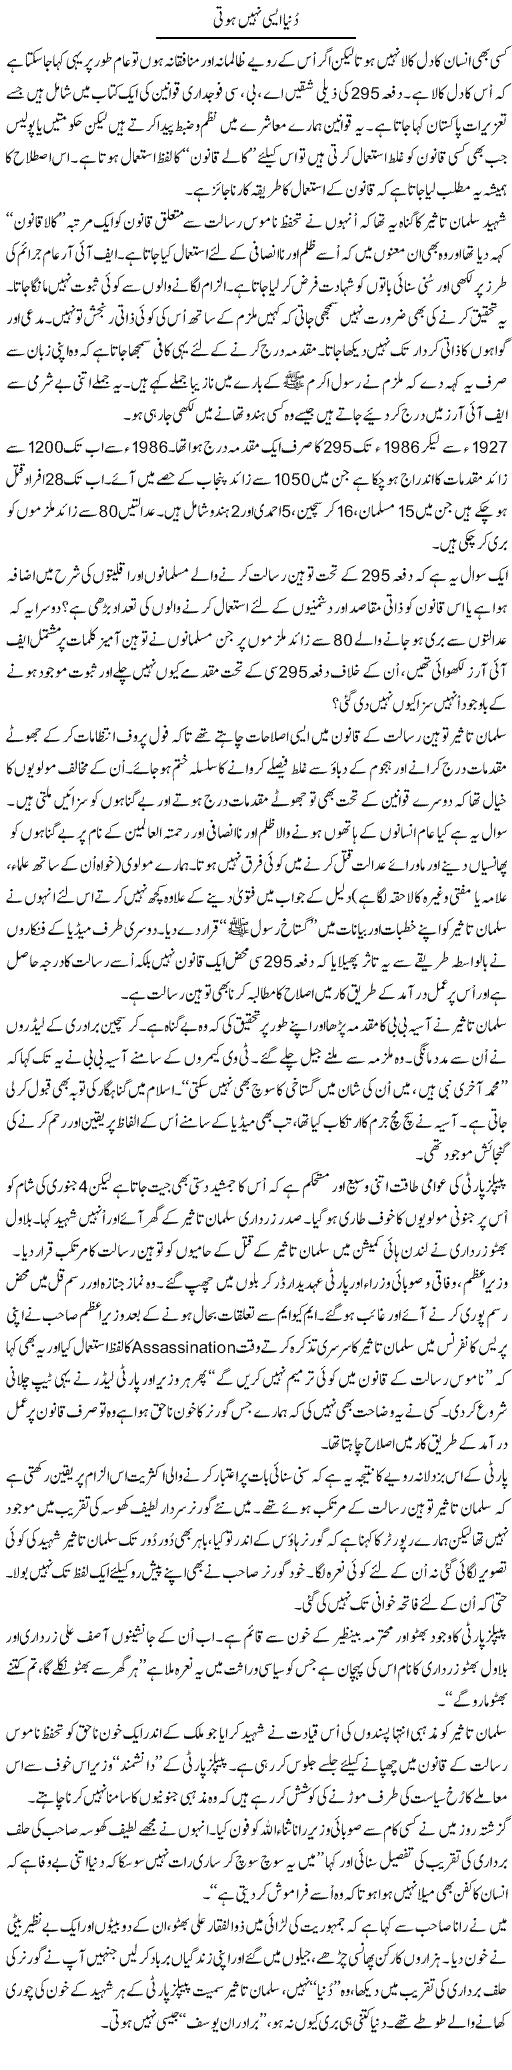 Salman Taseer Express Column Abbas Athar 15 January 2011